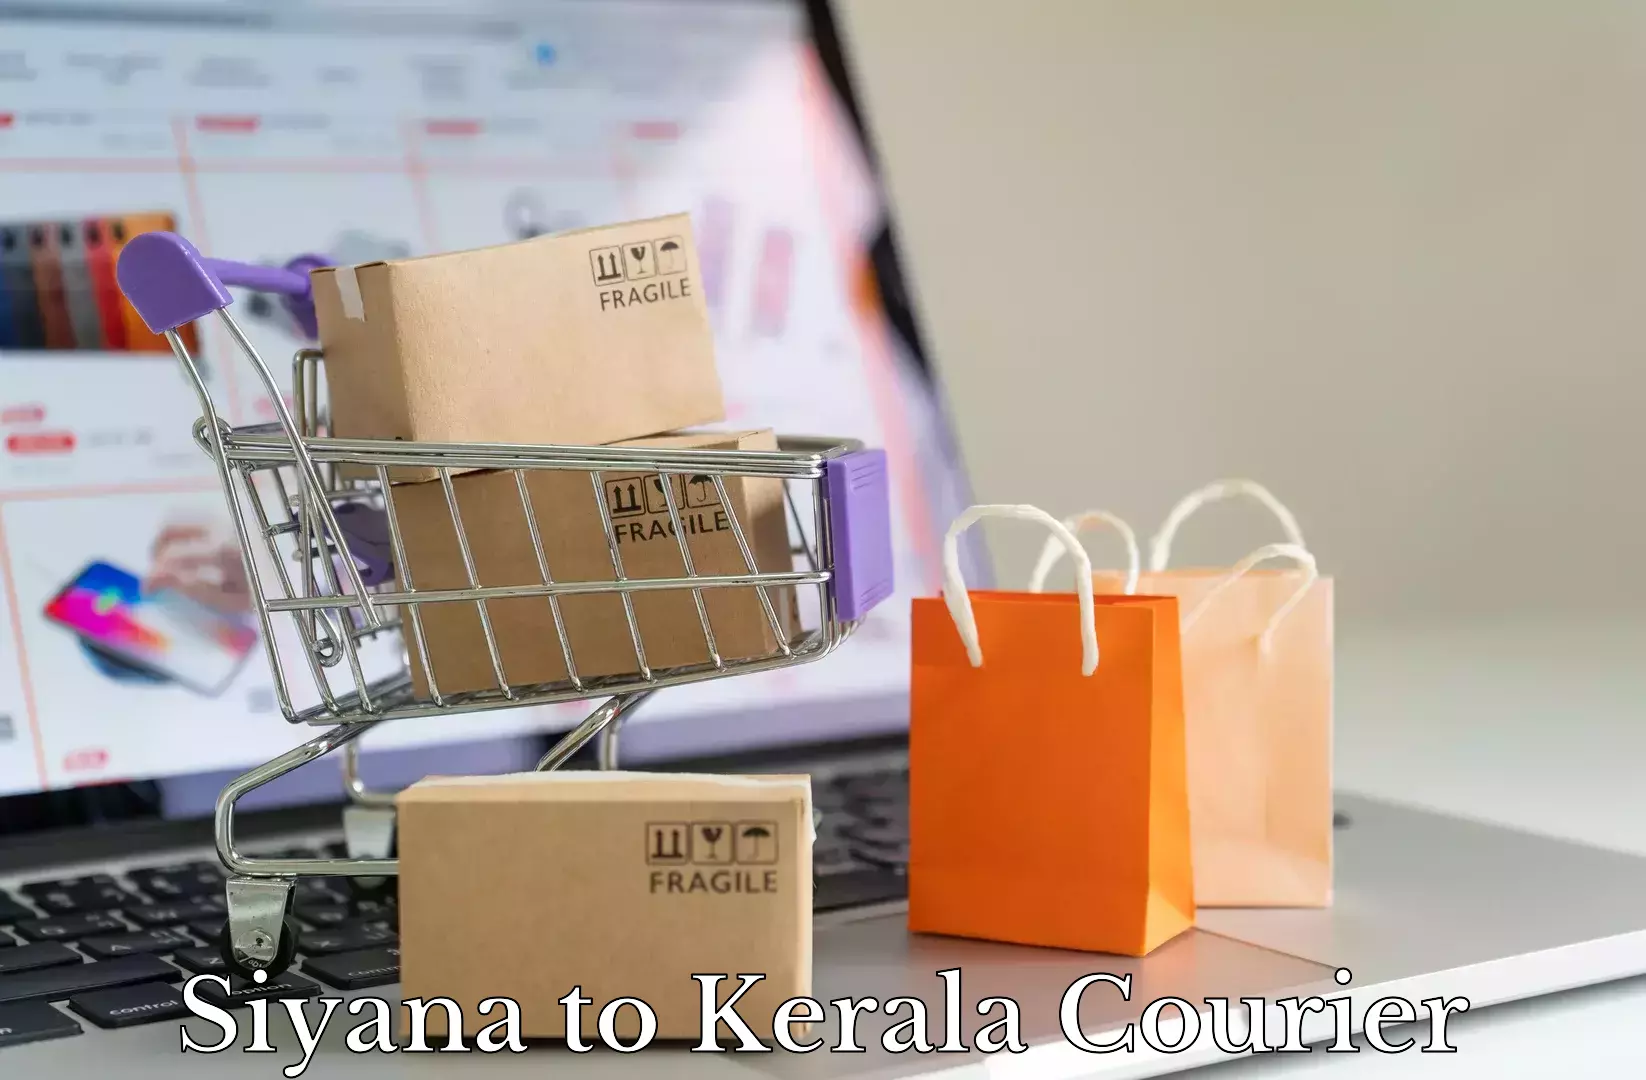 Professional movers and packers Siyana to Kerala